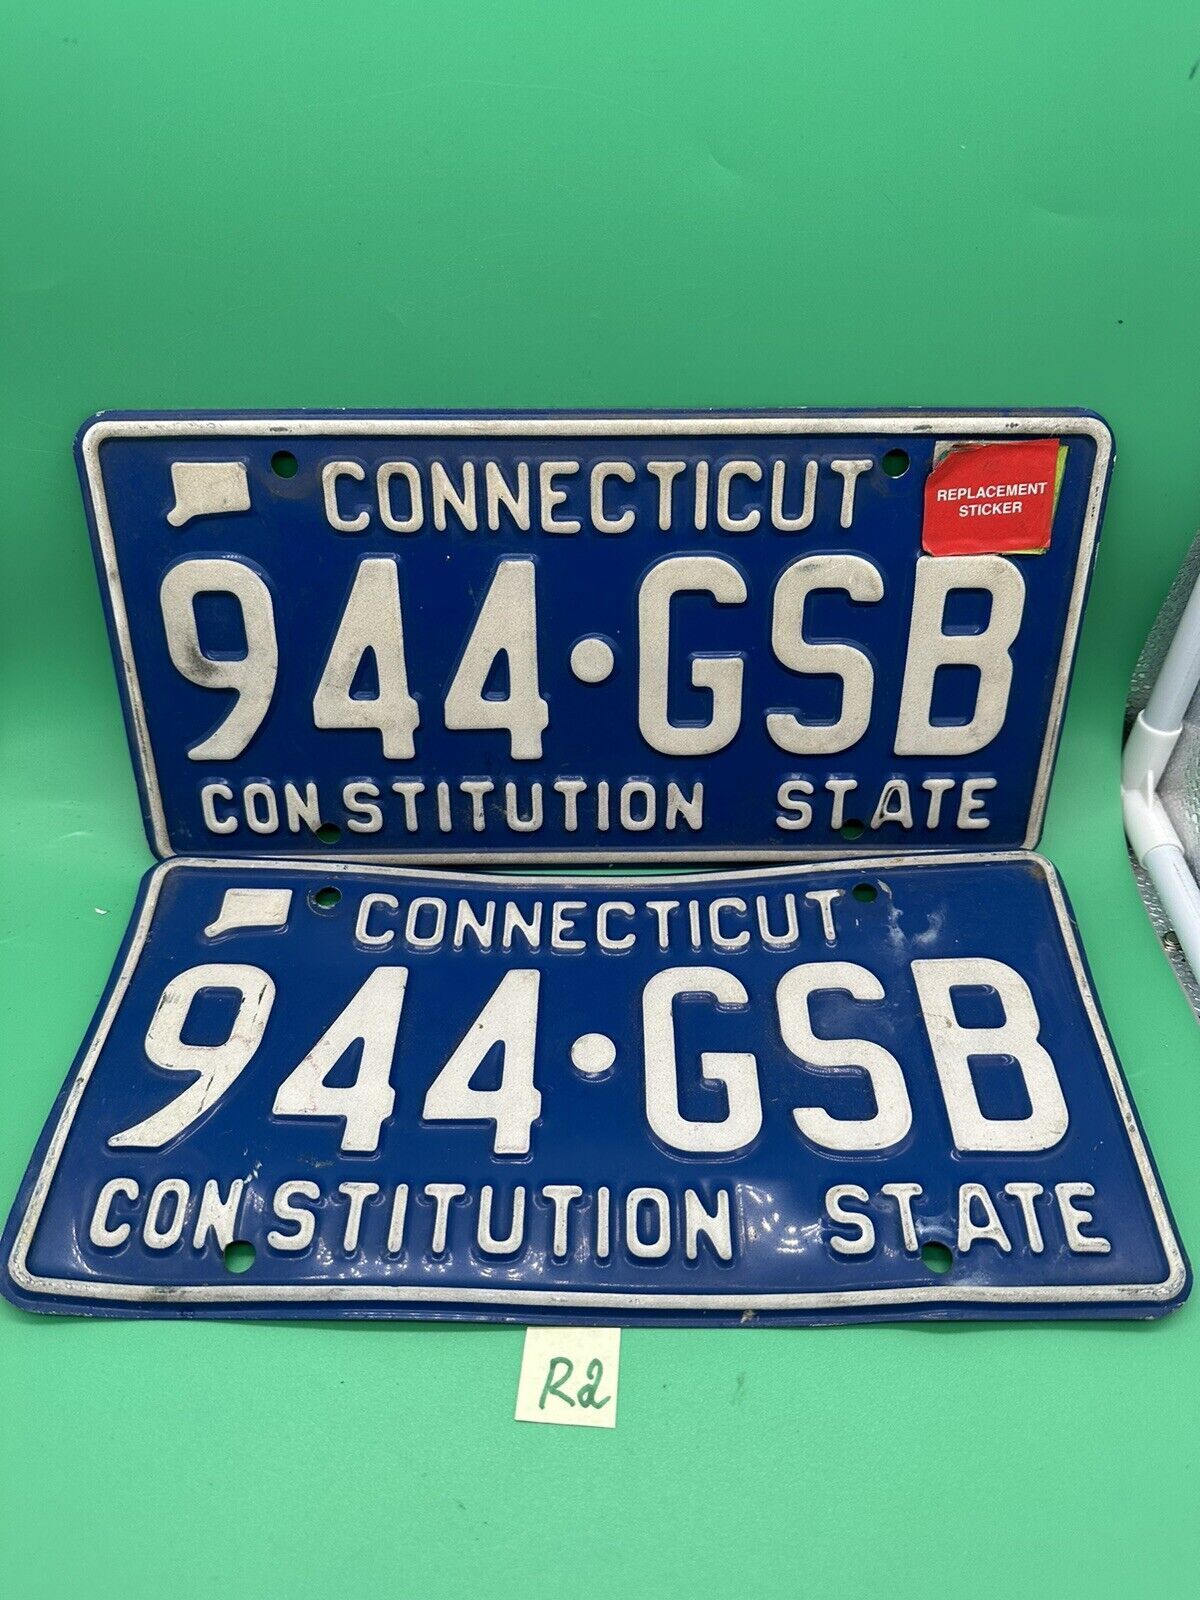 Vintage Pair Of 1980s Blue/White Connecticut License Plates #944-GSB